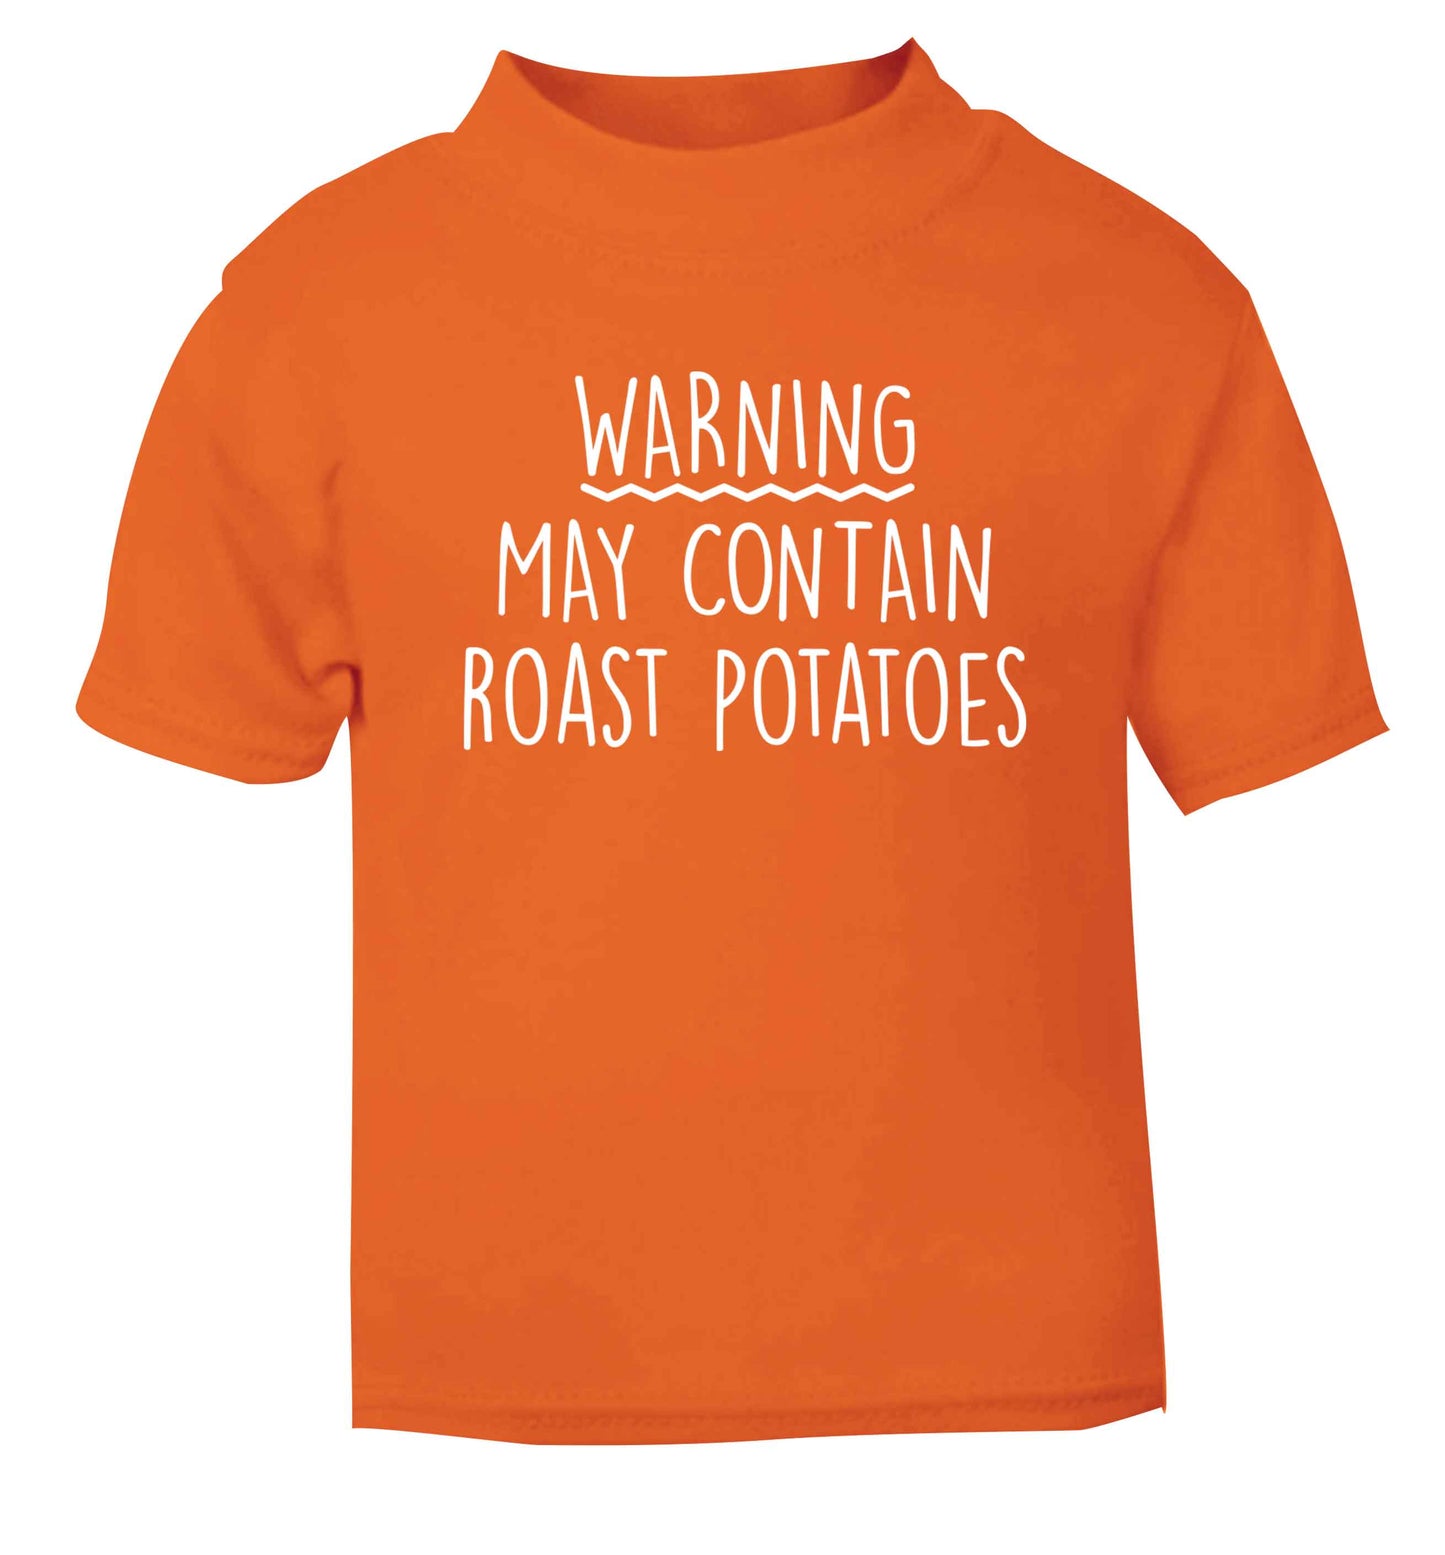 Warning may containg roast potatoes orange baby toddler Tshirt 2 Years